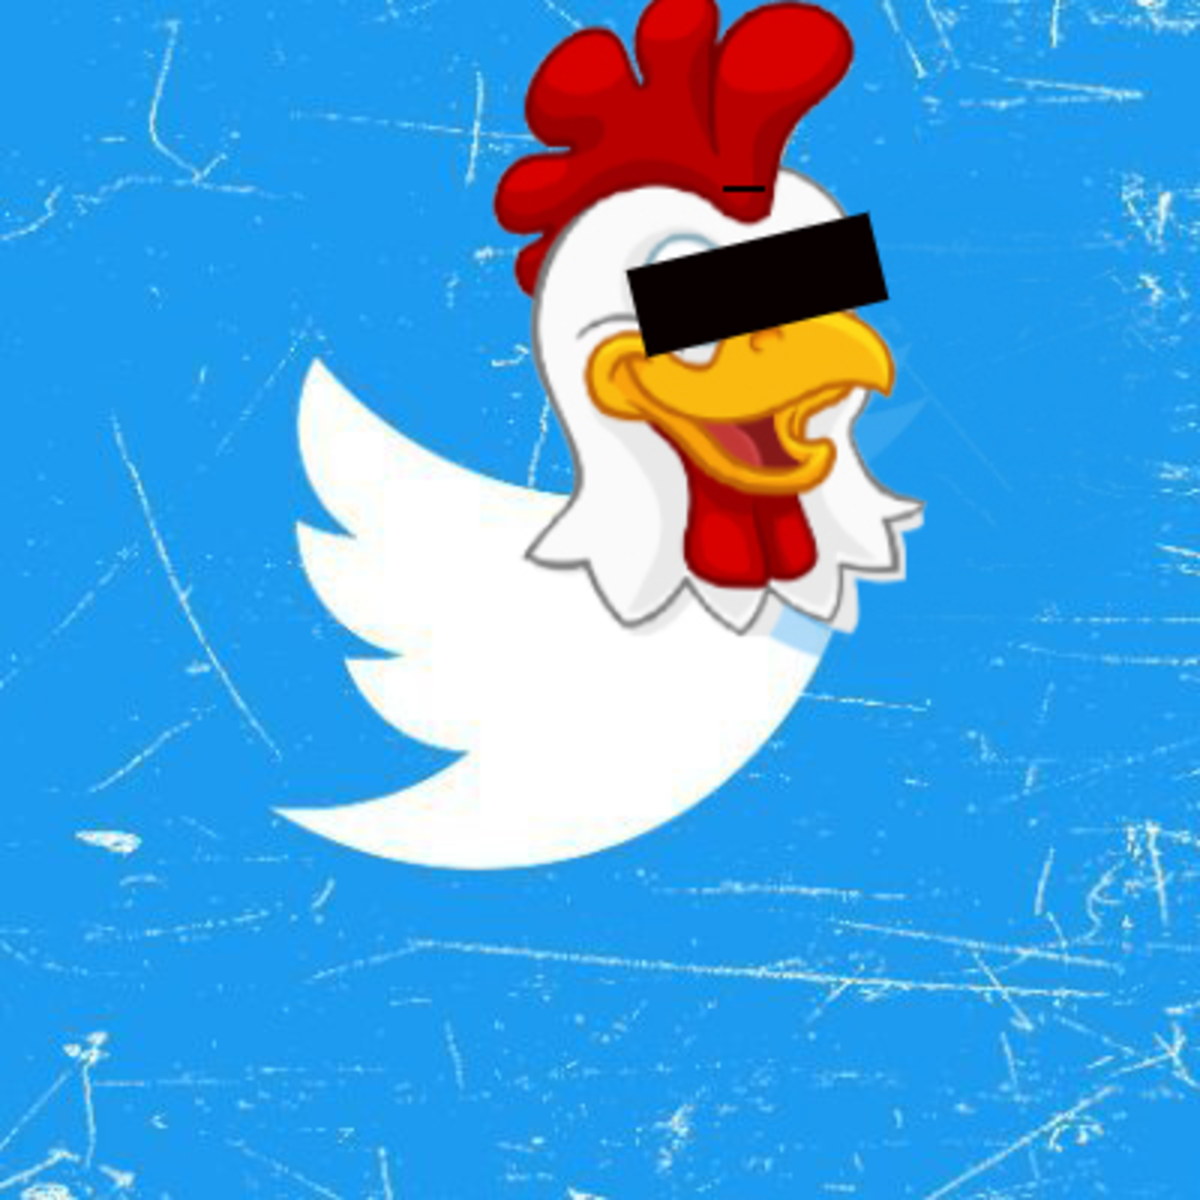 twitter chicken with a bar through face